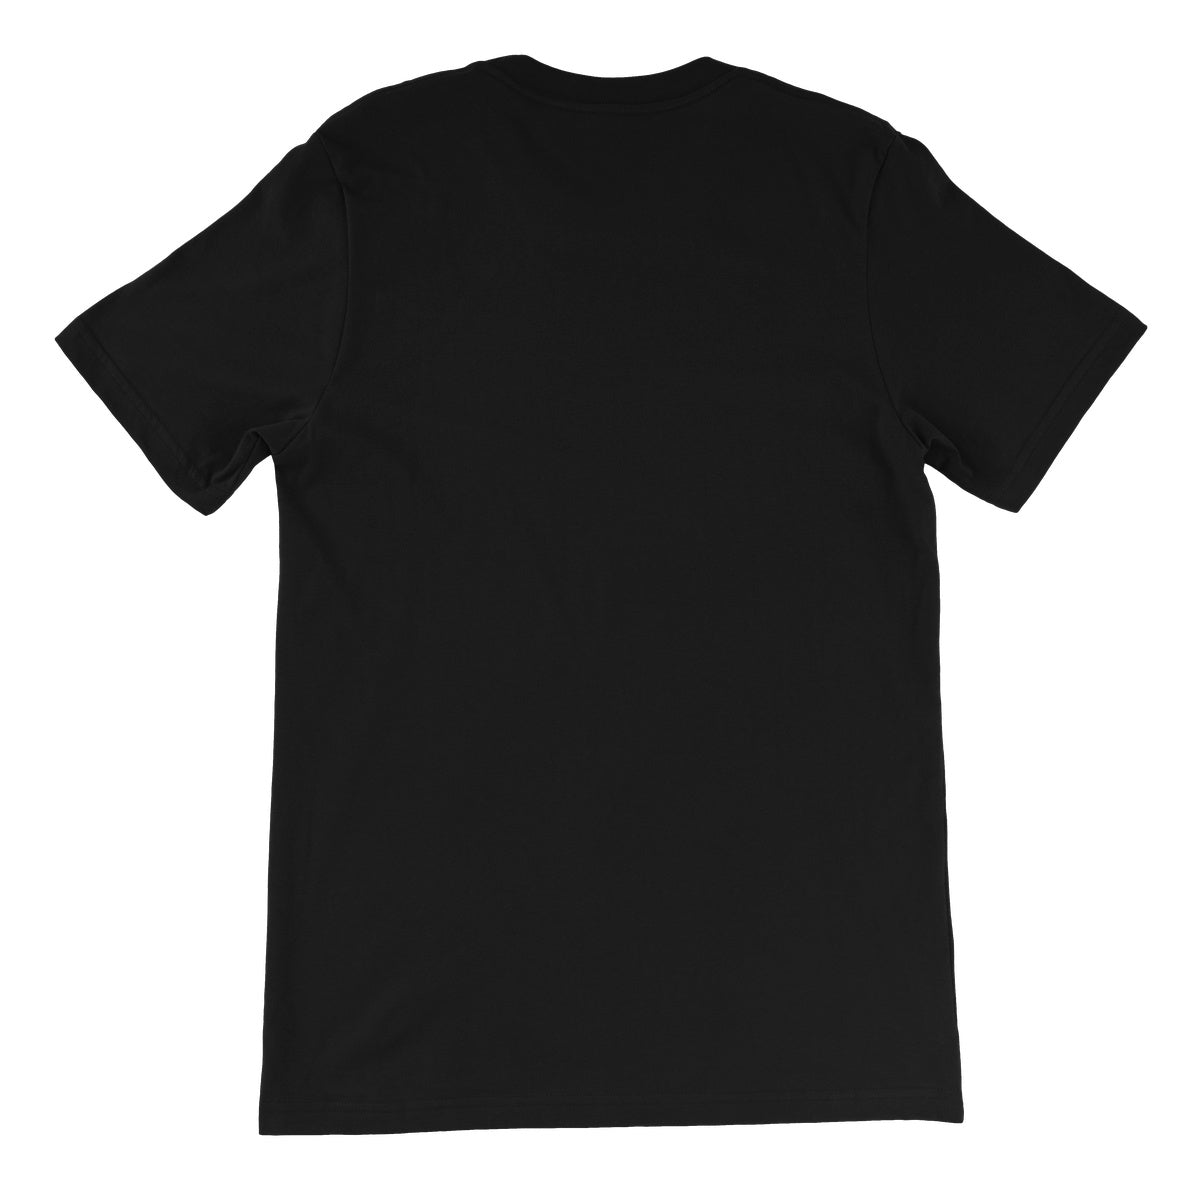 Fly Illustrated Tee Unisex Short Sleeve T-Shirt